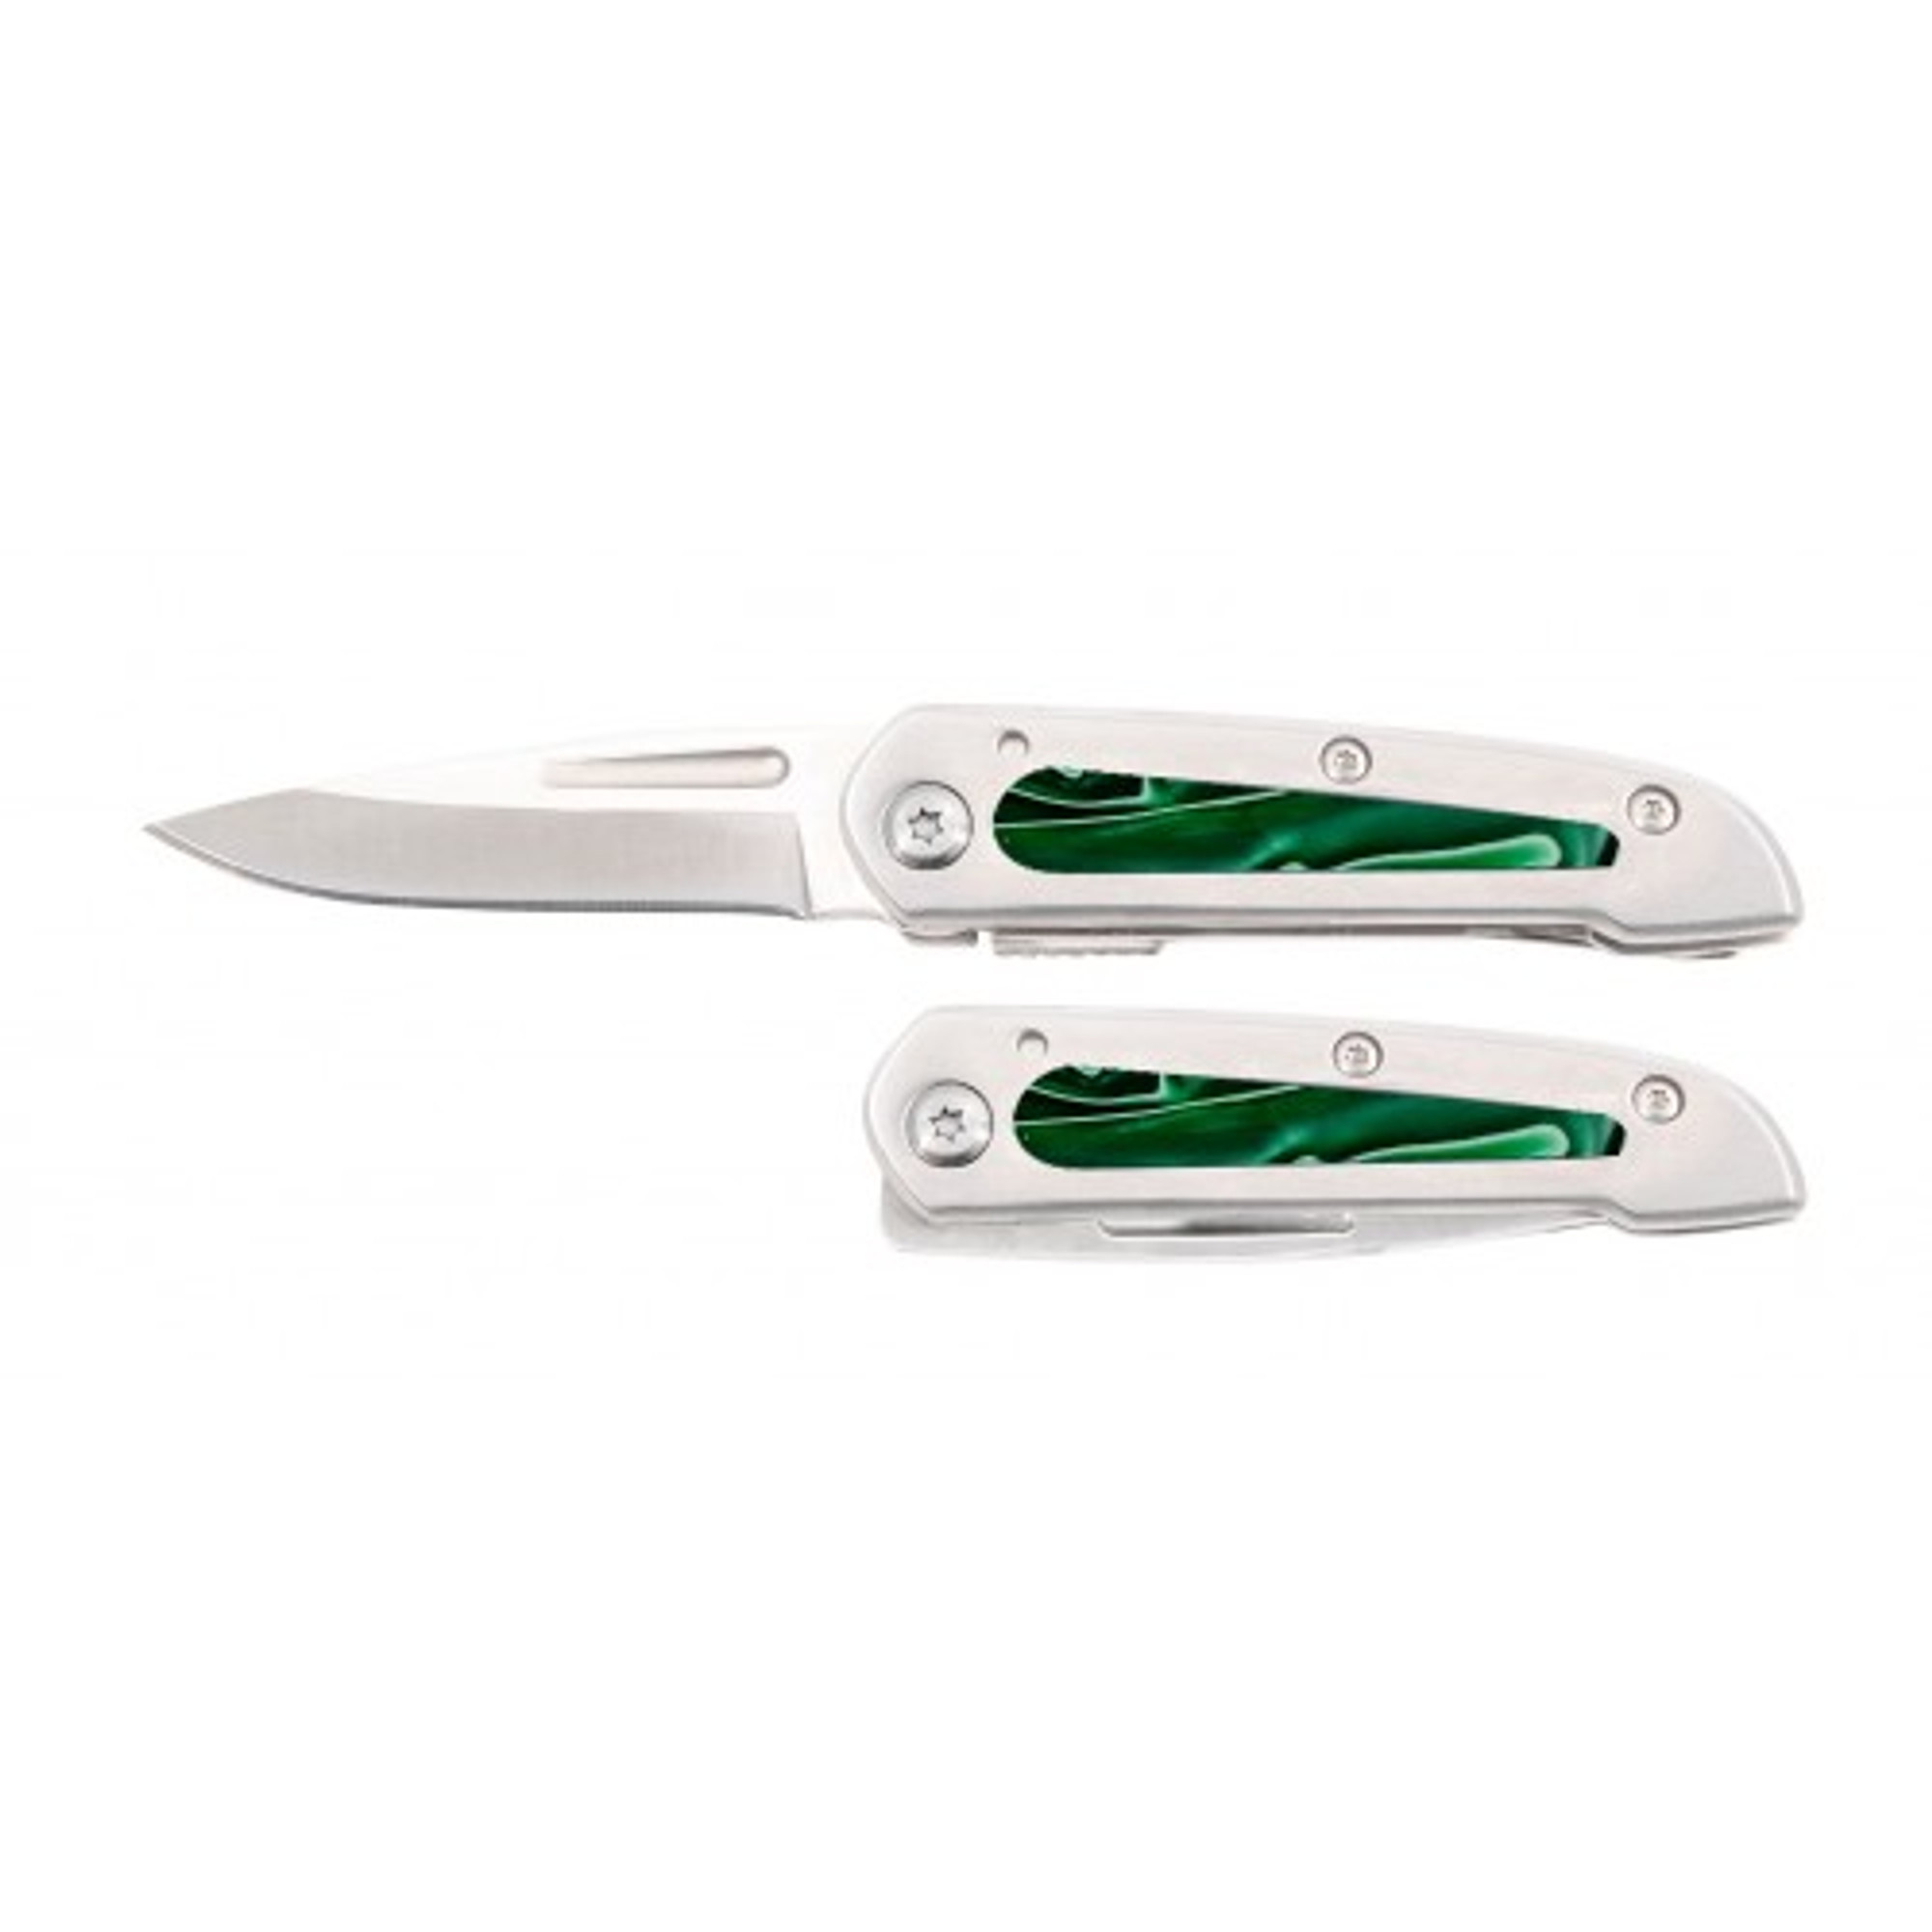 RUKO RUK0170TQ, 440A, 2-1/4" Folding Blade Pocket Knife, Stainless Steel Handle w/Turquoise Jade Acrylic Inlay, boxed